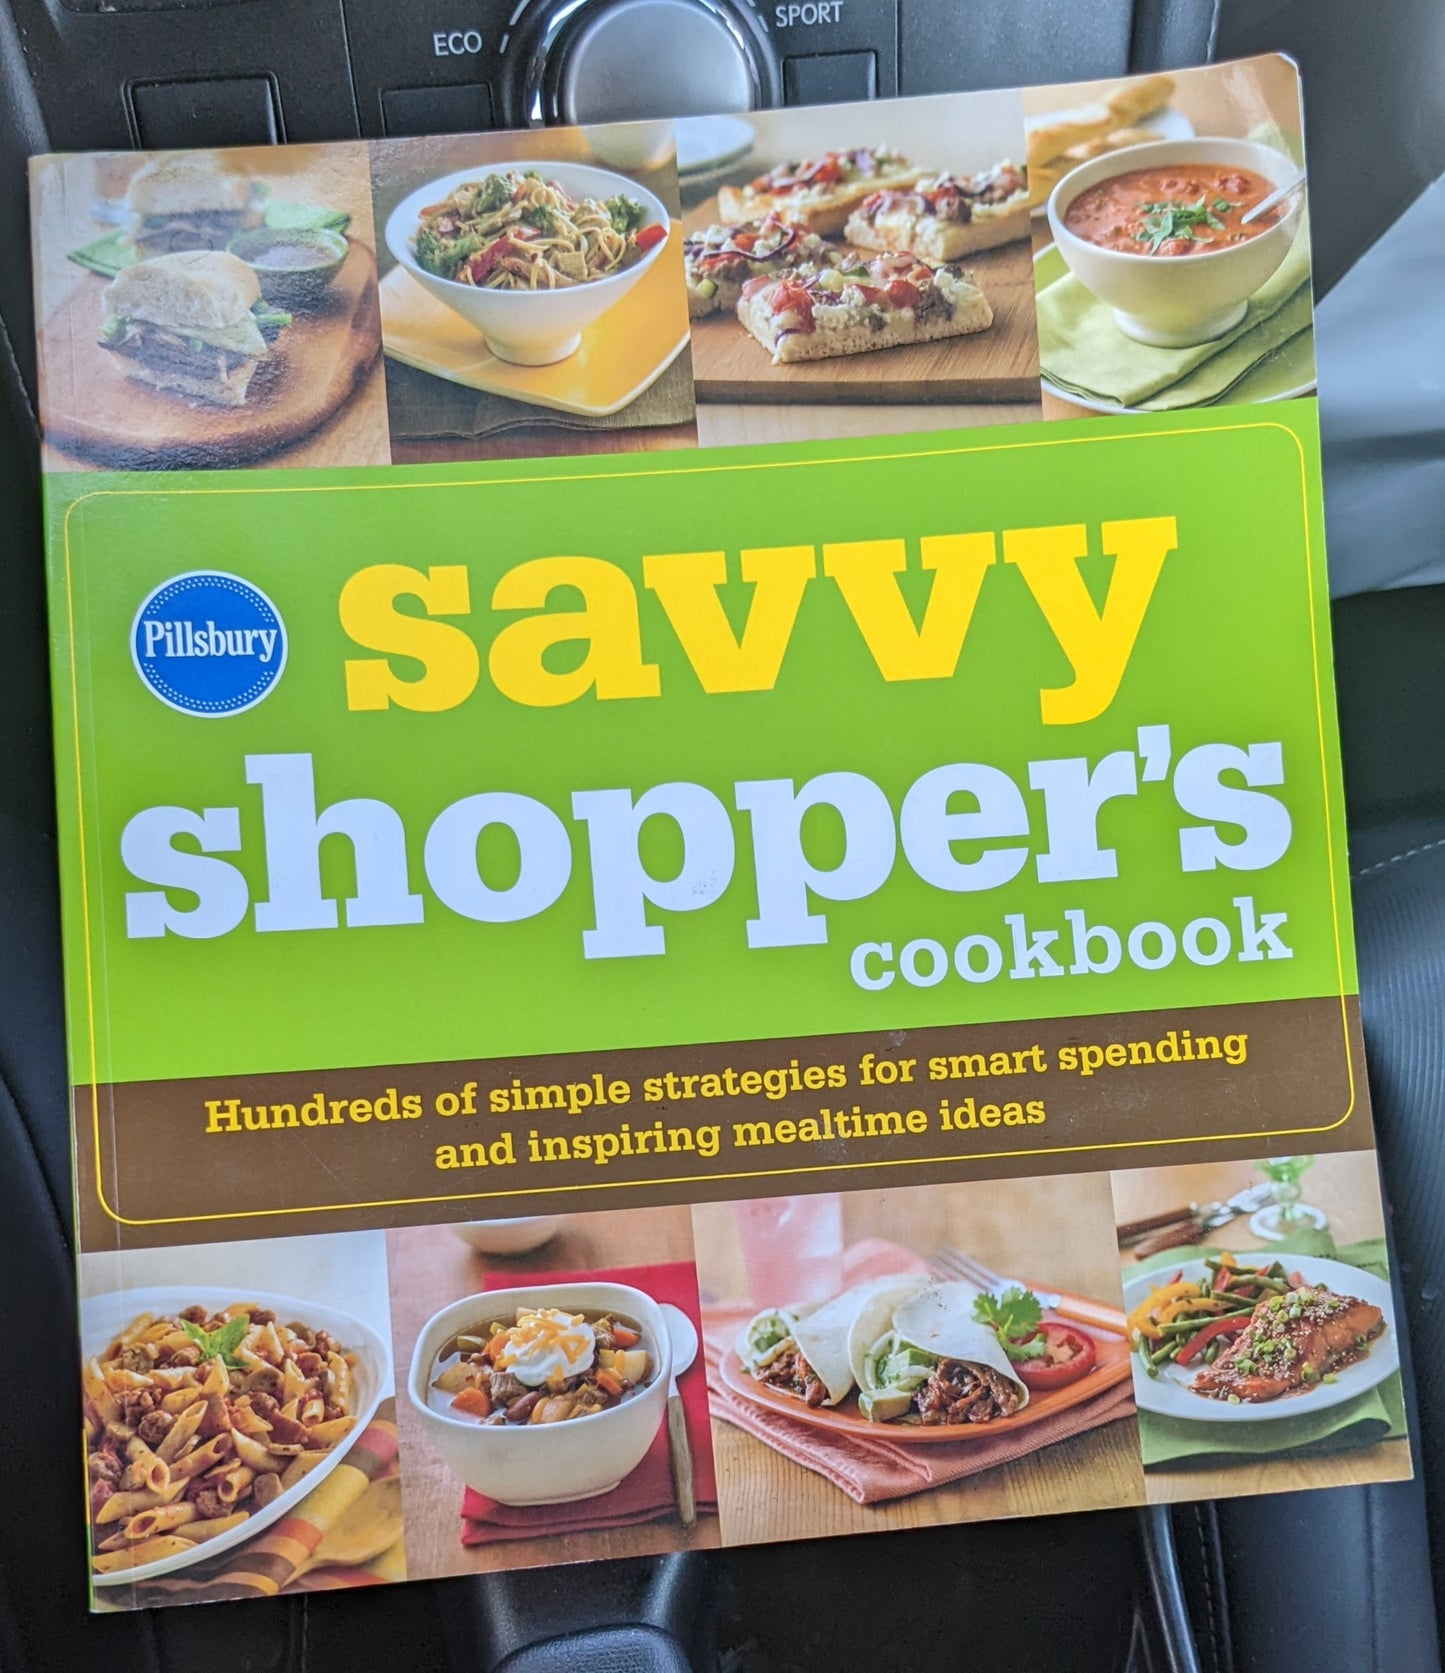 Pillsbury Savvy Shopper's Cookbook, recipe book